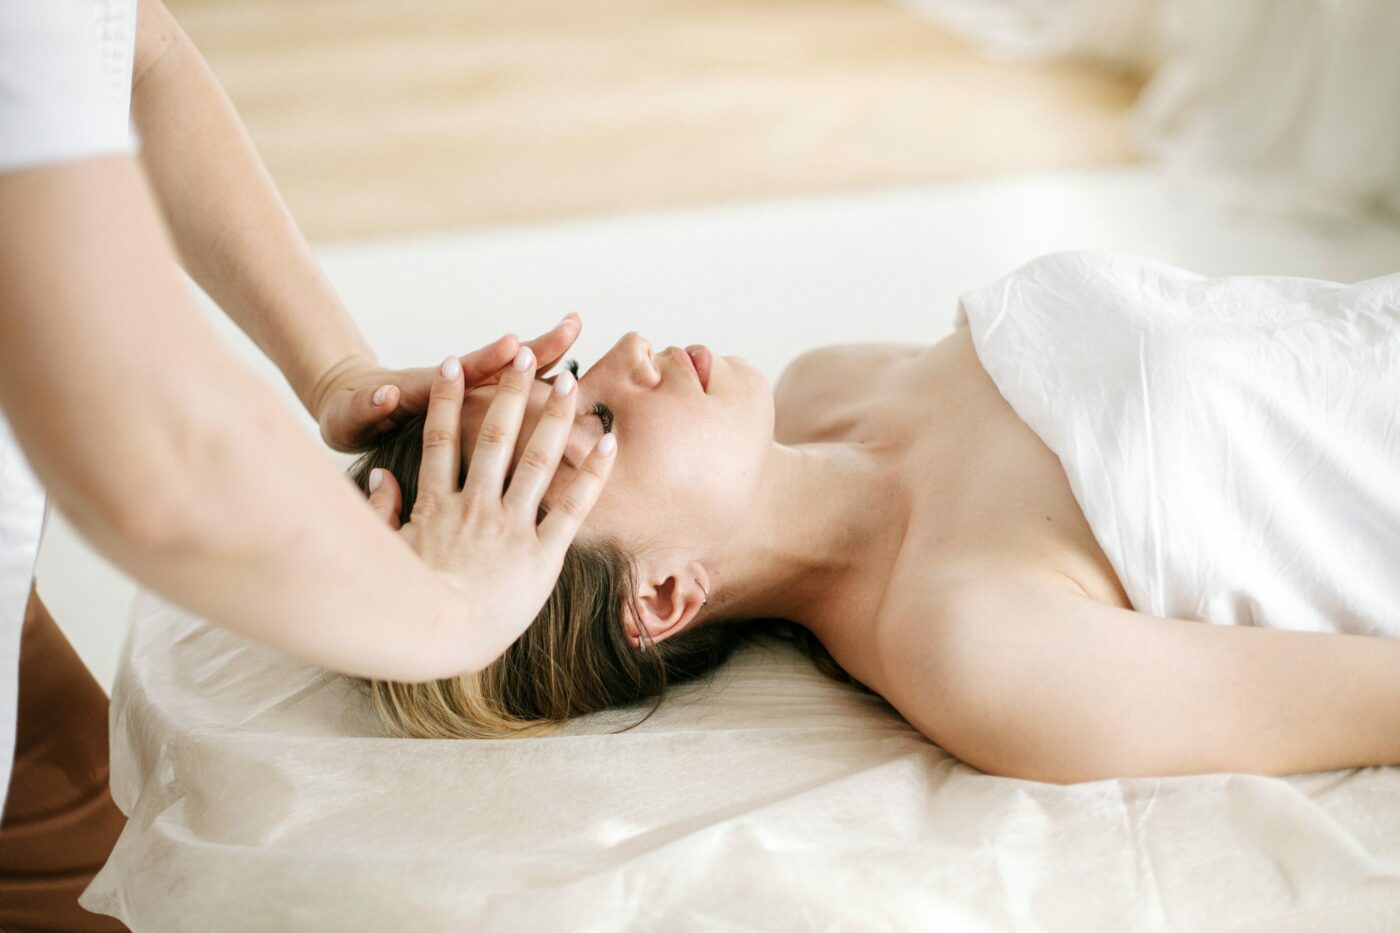 Toucher massage en soins palliatifs